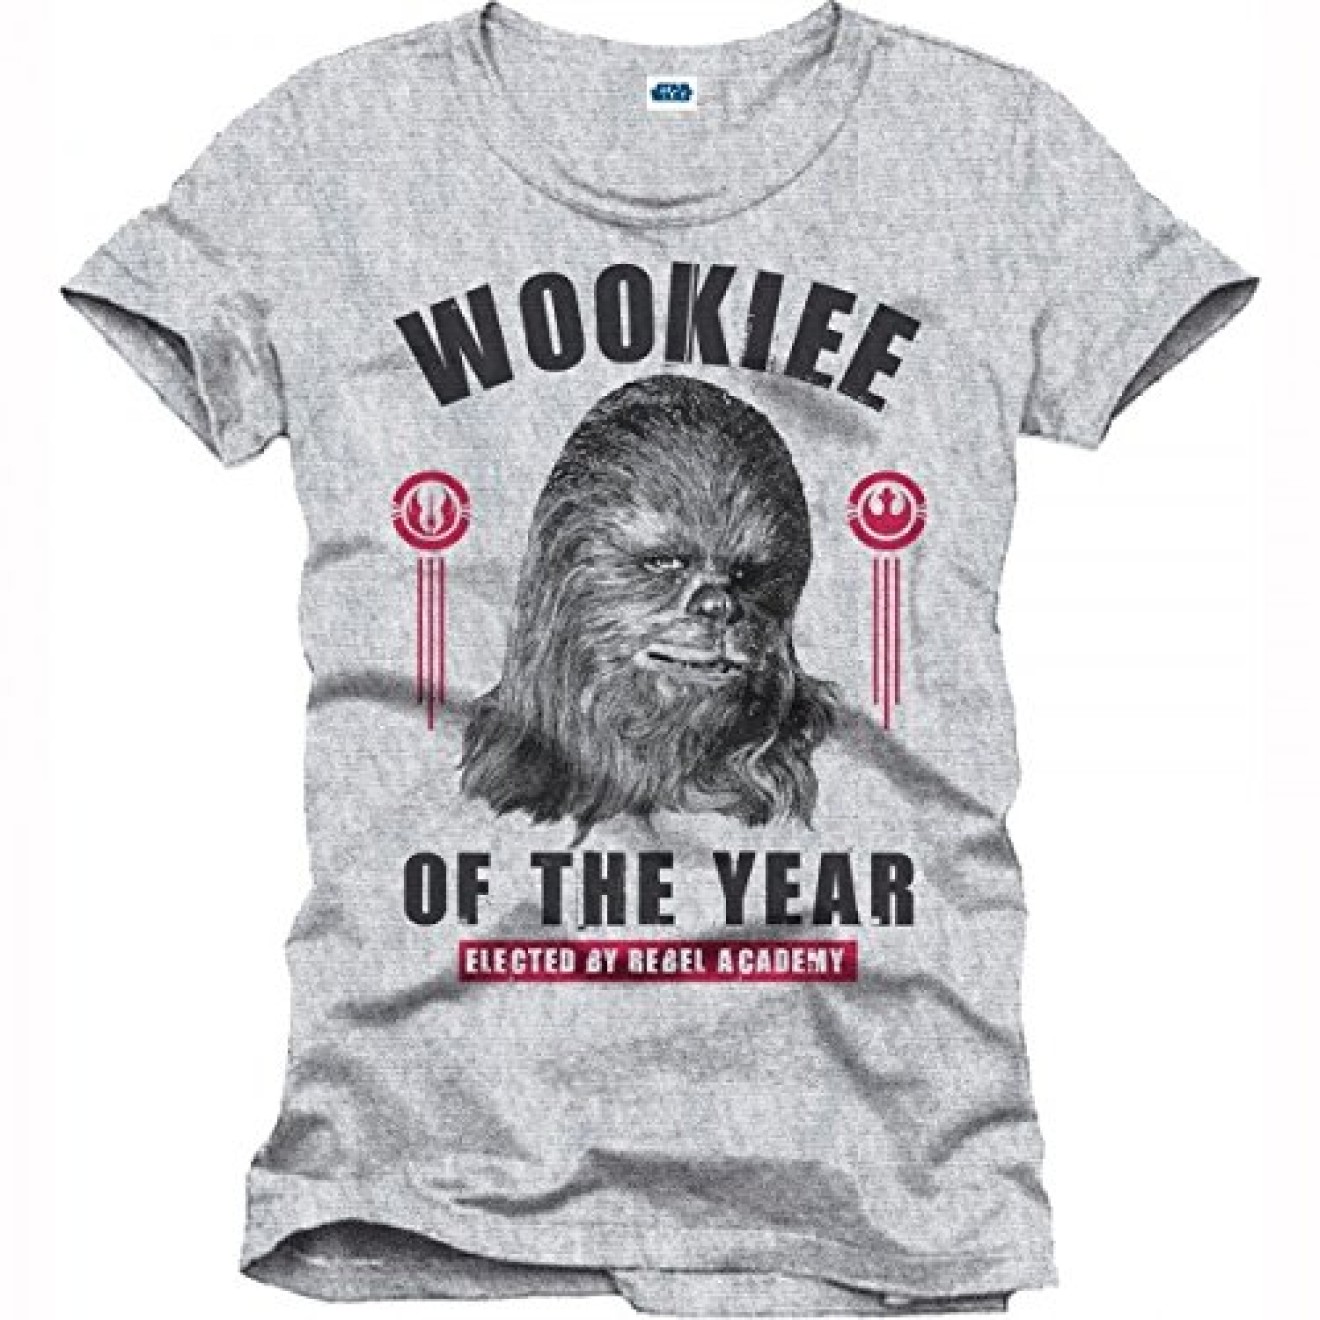 Star Wars T-Shirt Wookiee Chewbacca